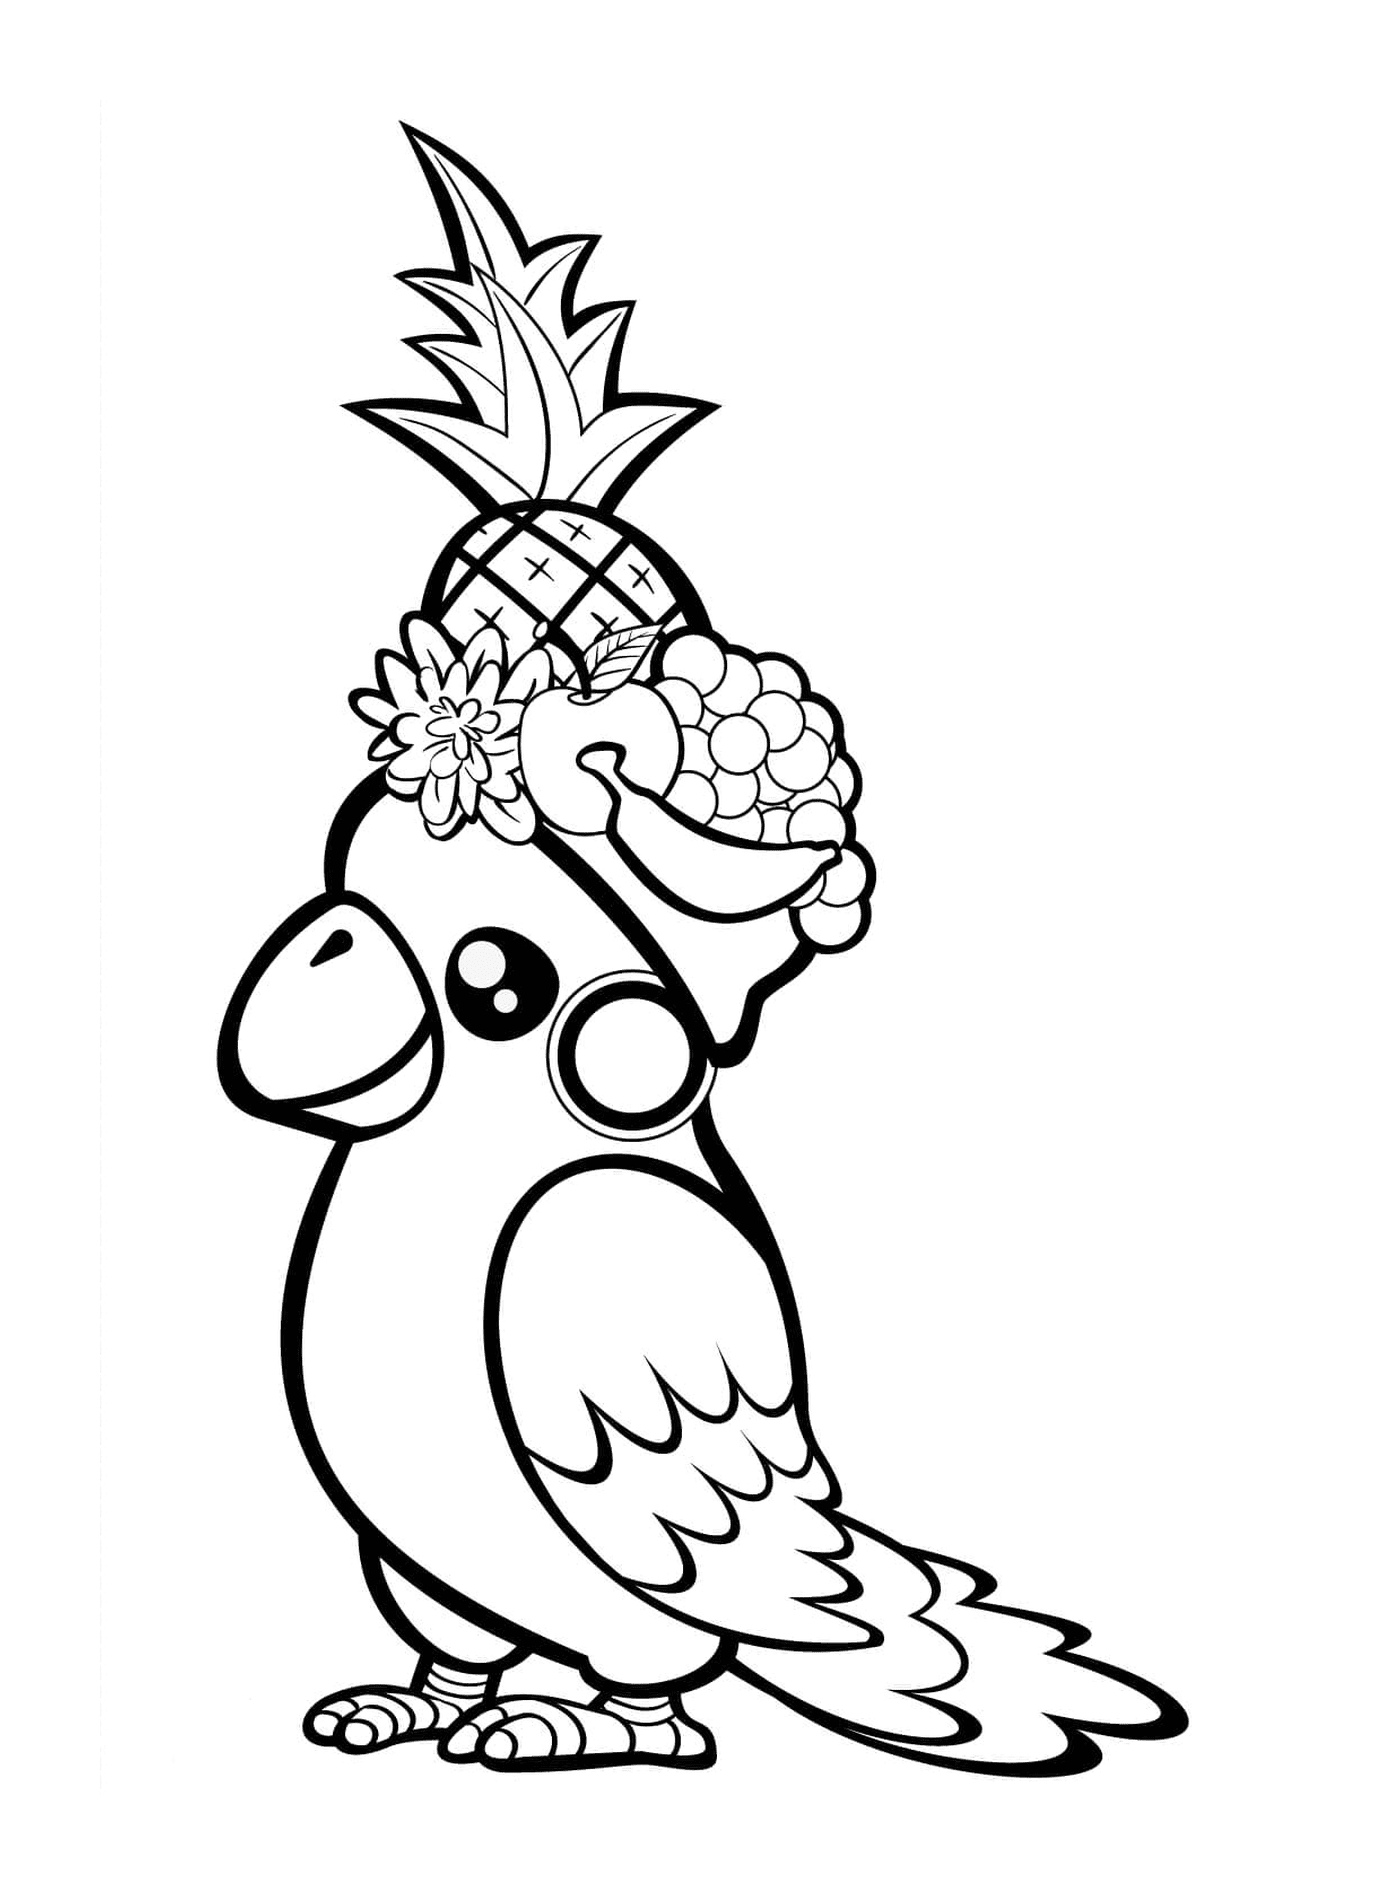  Royal parrot holding pineapple 